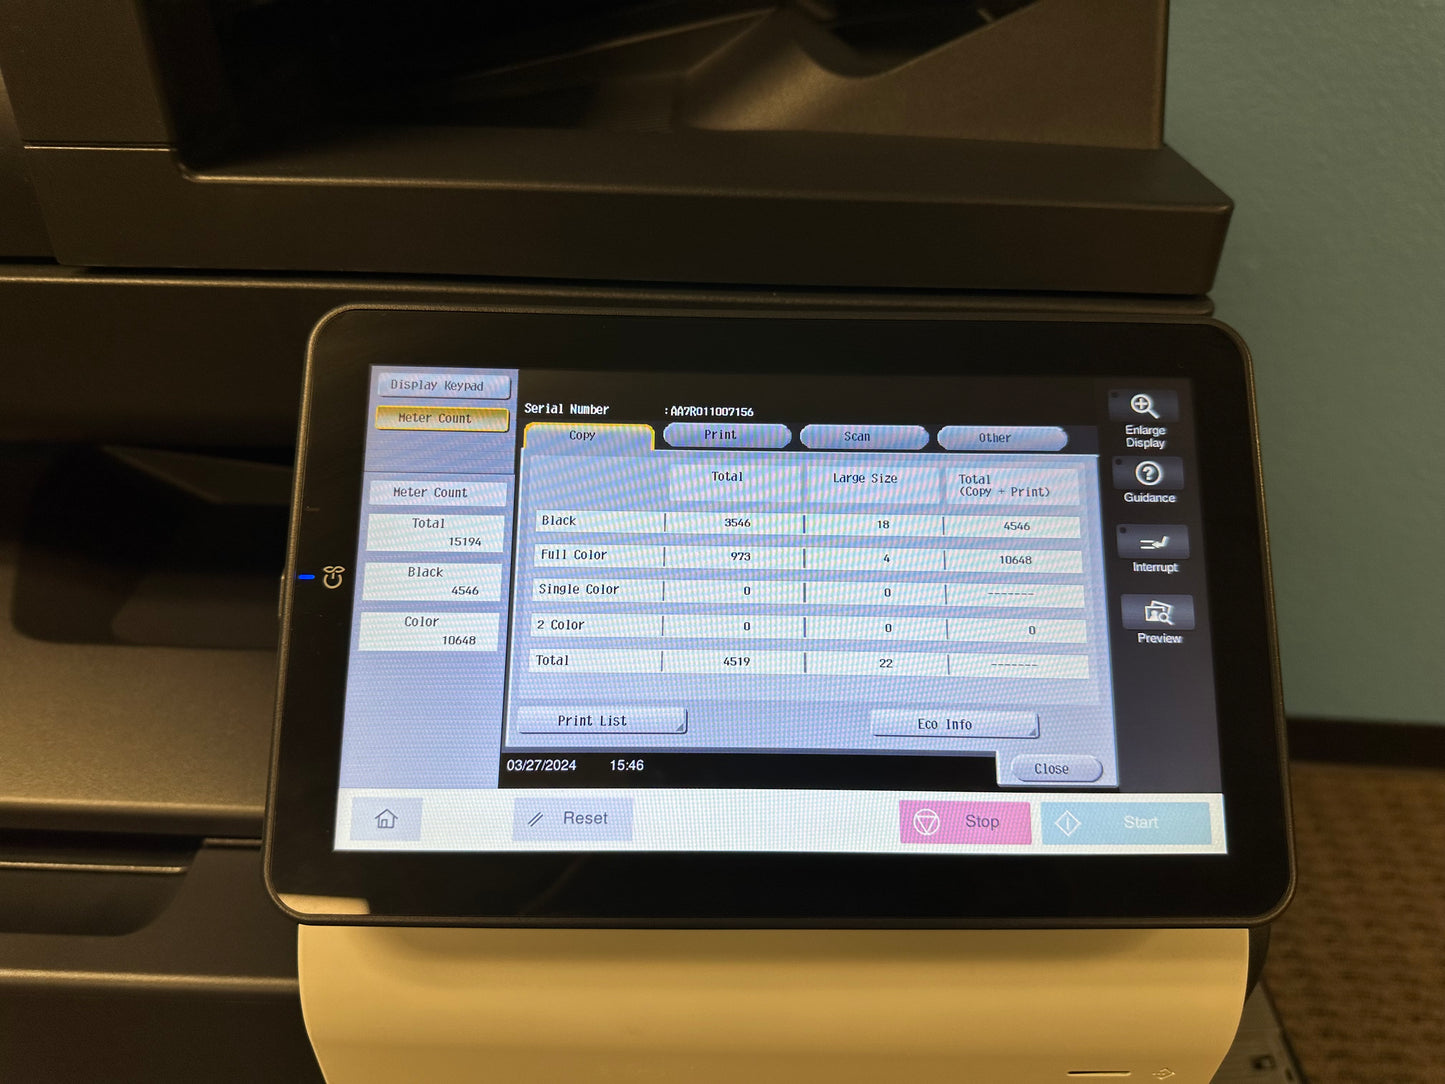 WOW Demo Unit Konica Minolta Bizhub C450i Color Copier Printer Scan Low 15k Usage